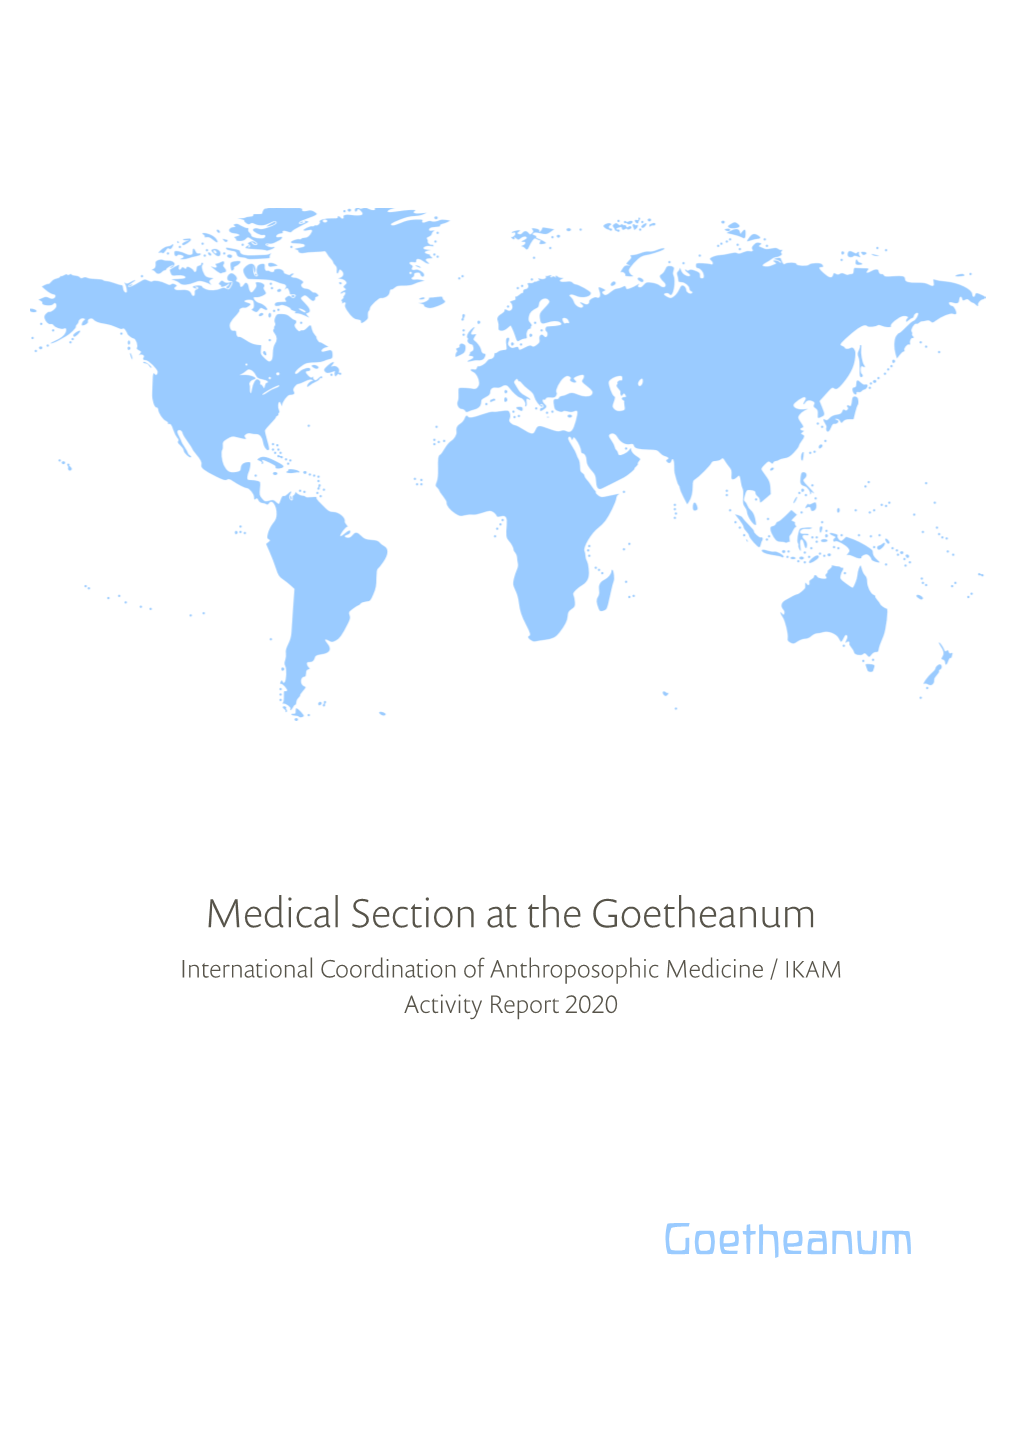 Goetheanum International Coordination of Anthroposophic Medicine / IKAM Activity Report 2020